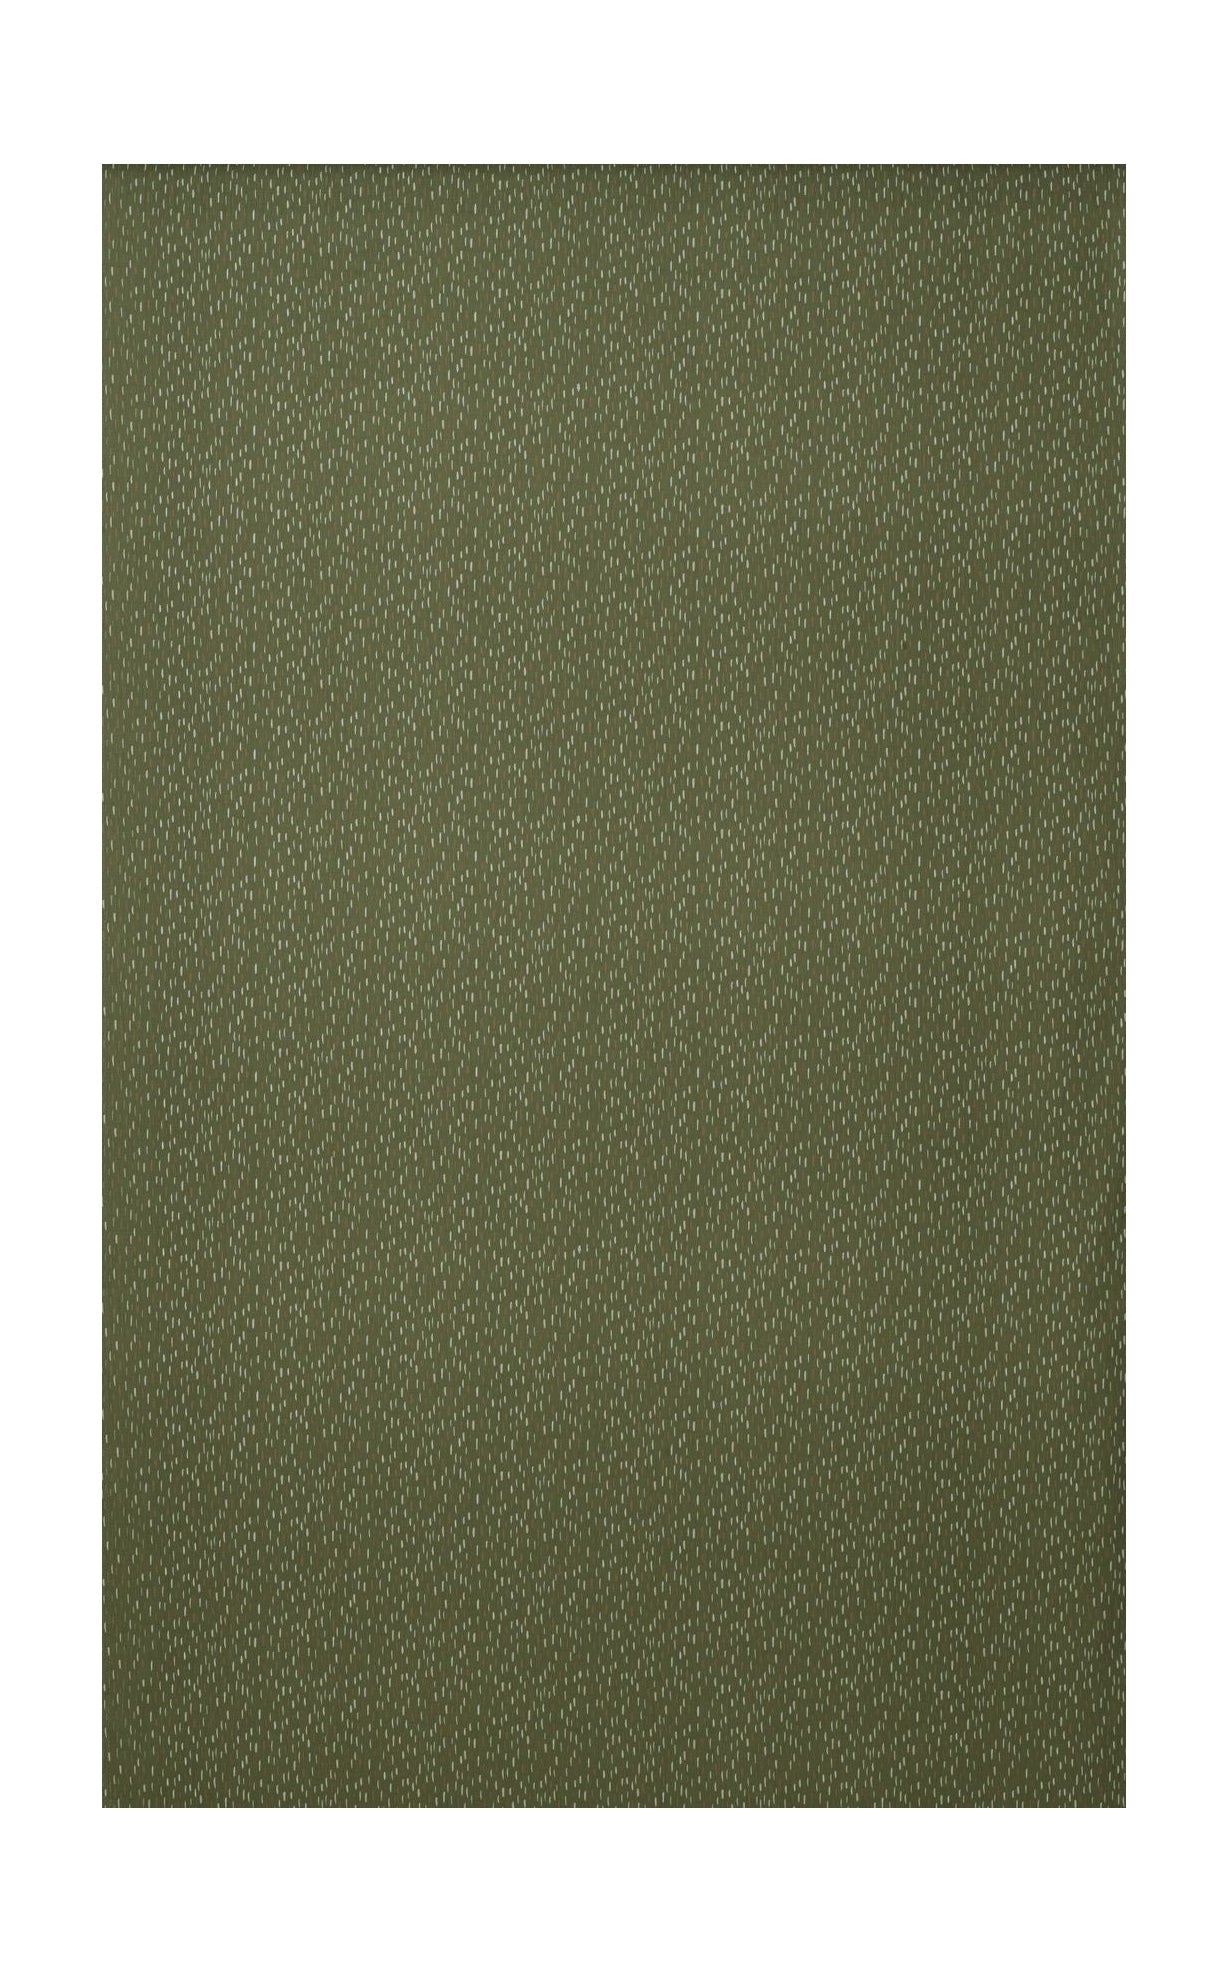 Spira konst tygbredd 150 cm (pris per meter), grönt